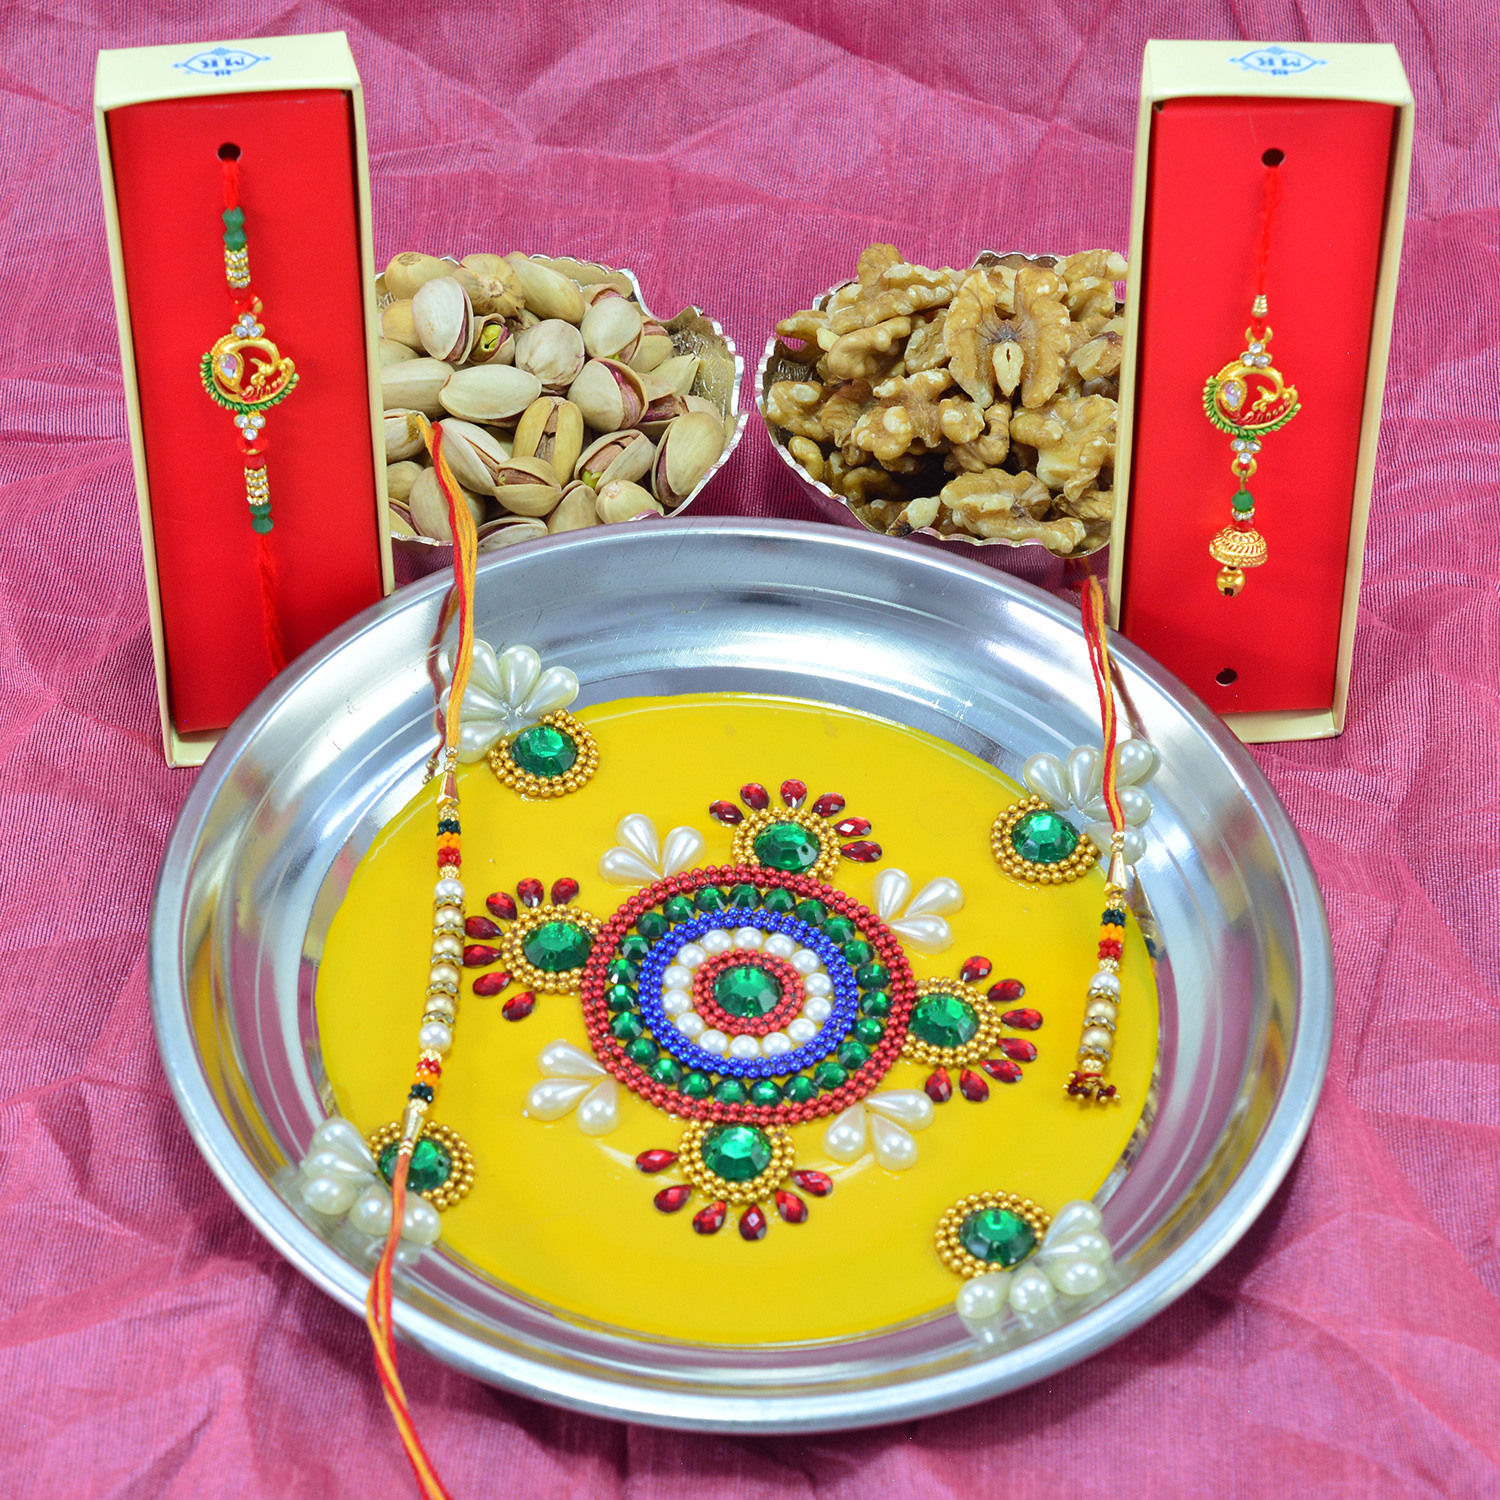 Wonderful Crafted Pooja Thali with Amazing Bhaiya Bhabhi Rakhi and Yummy Pista and Walnut Dry Fruits